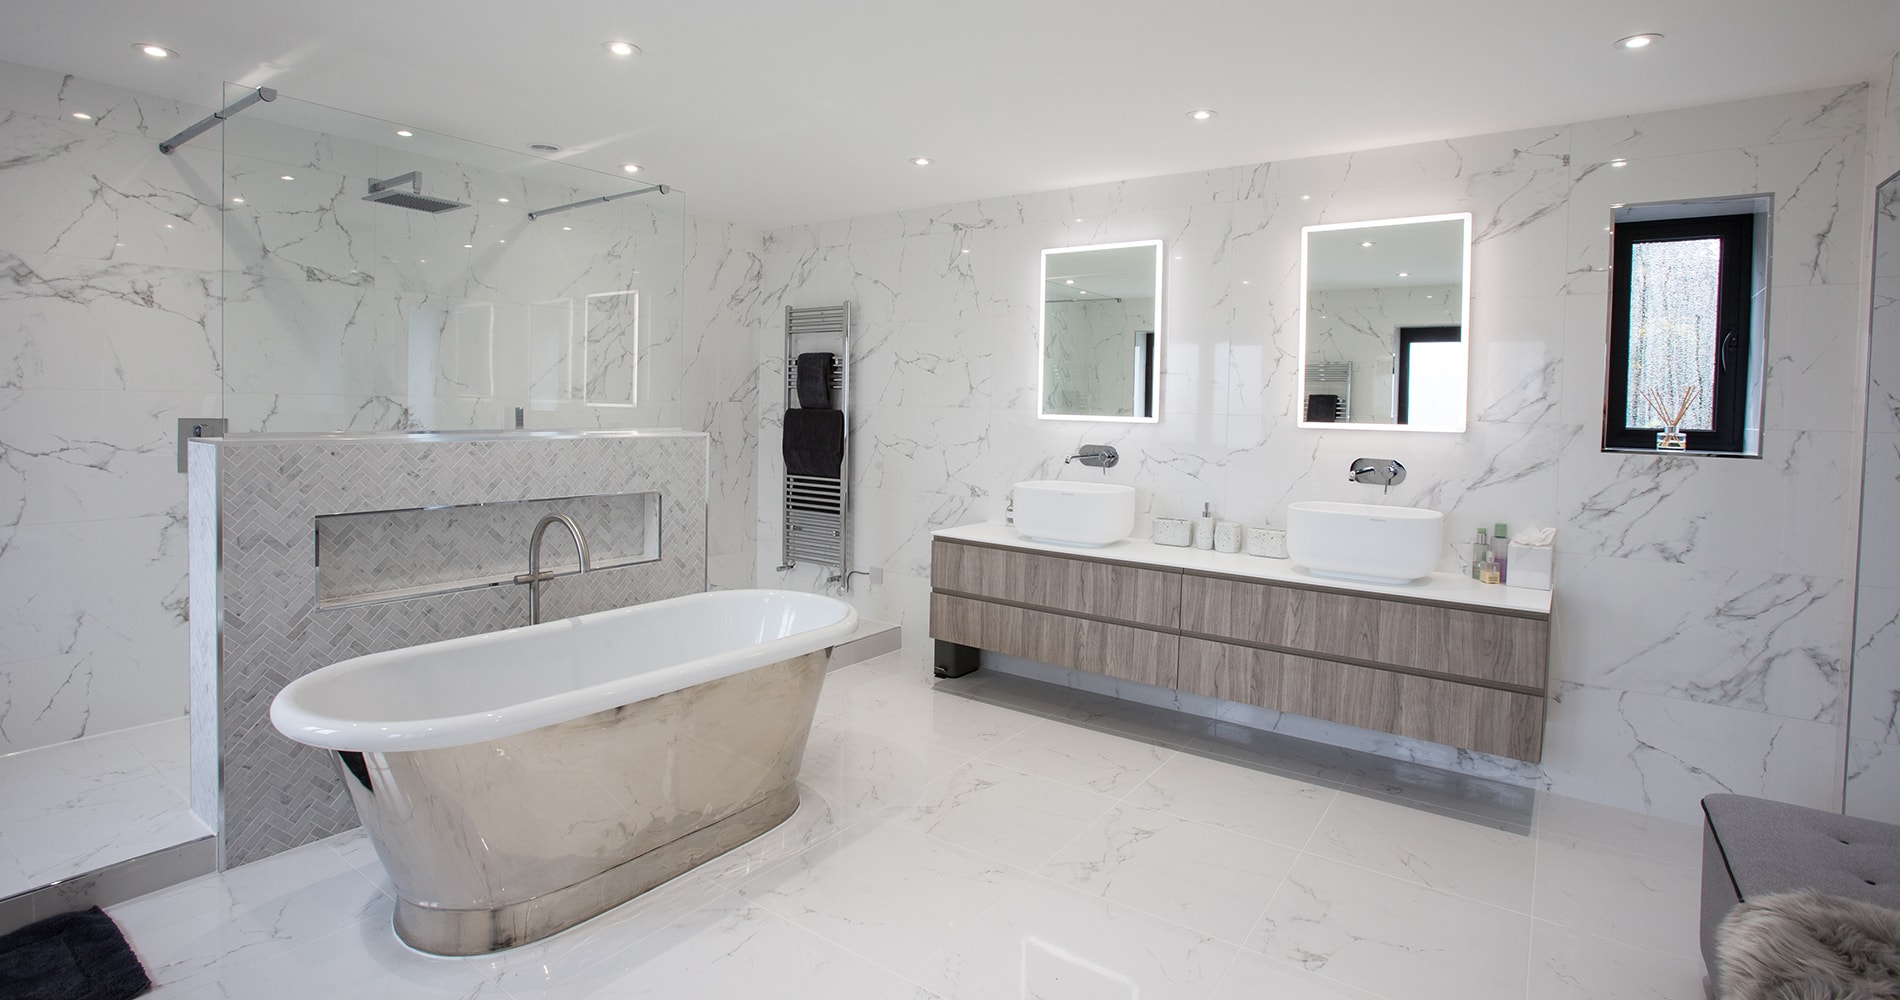 House-Remodel-Bathroom-Design